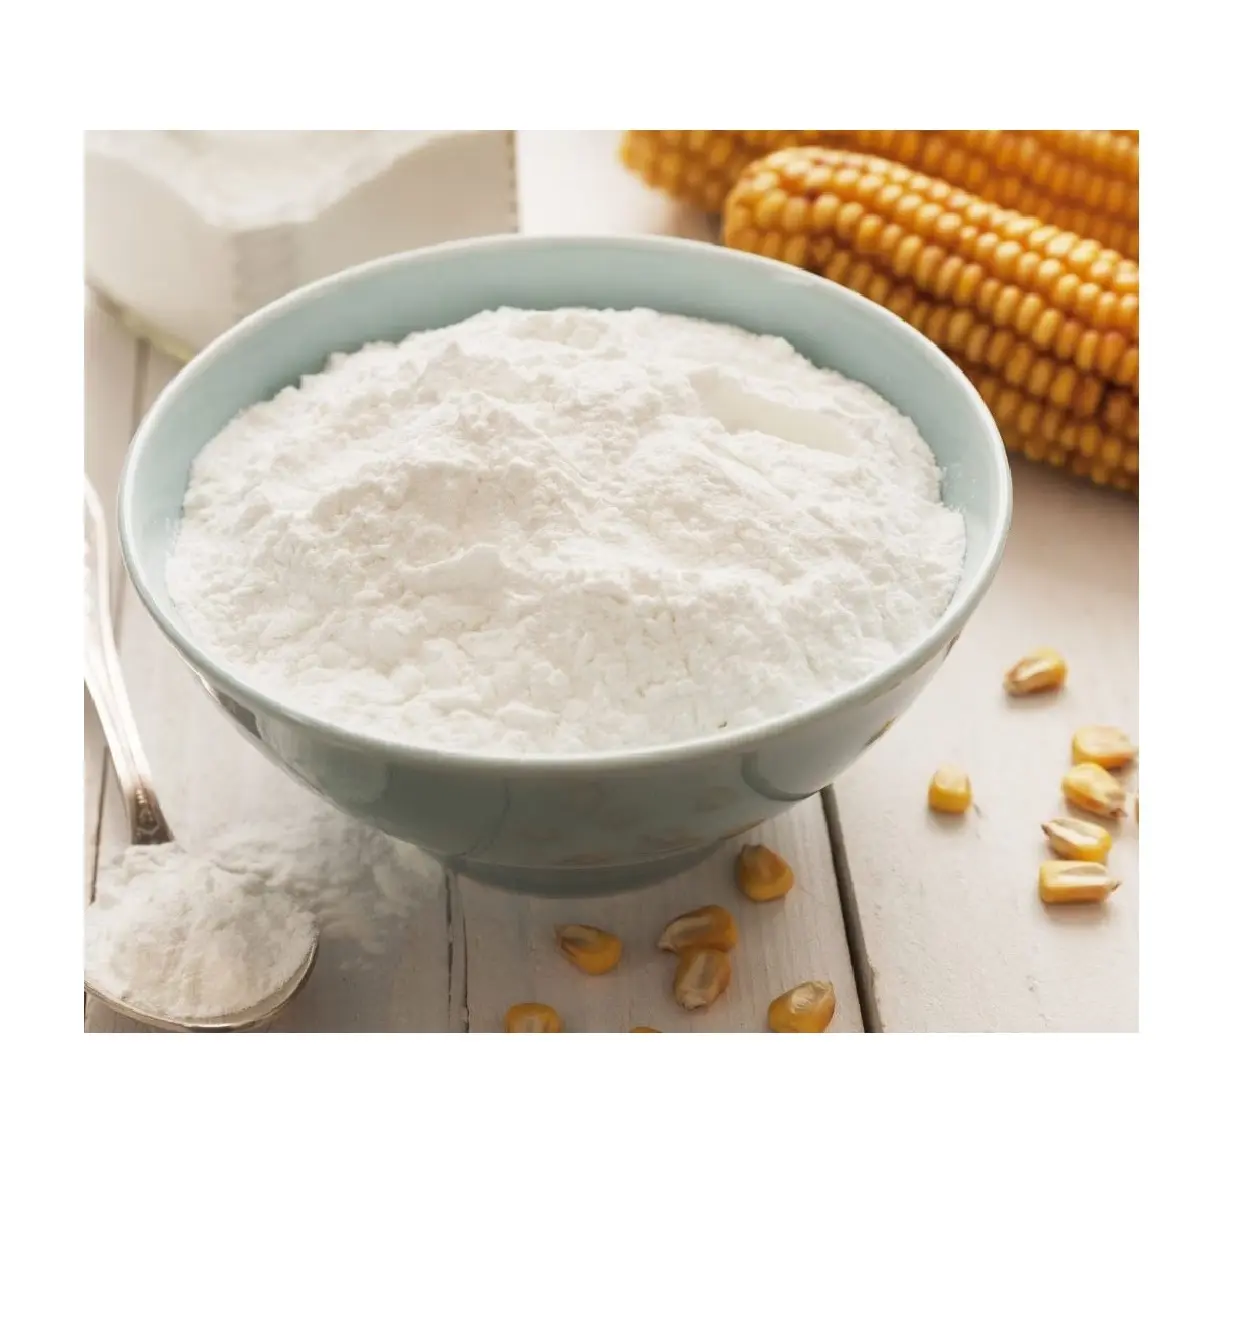 Tepung jagung jumlah besar kelas makanan/suplemen jagung dimodifikasi/bubuk singkong tapioka